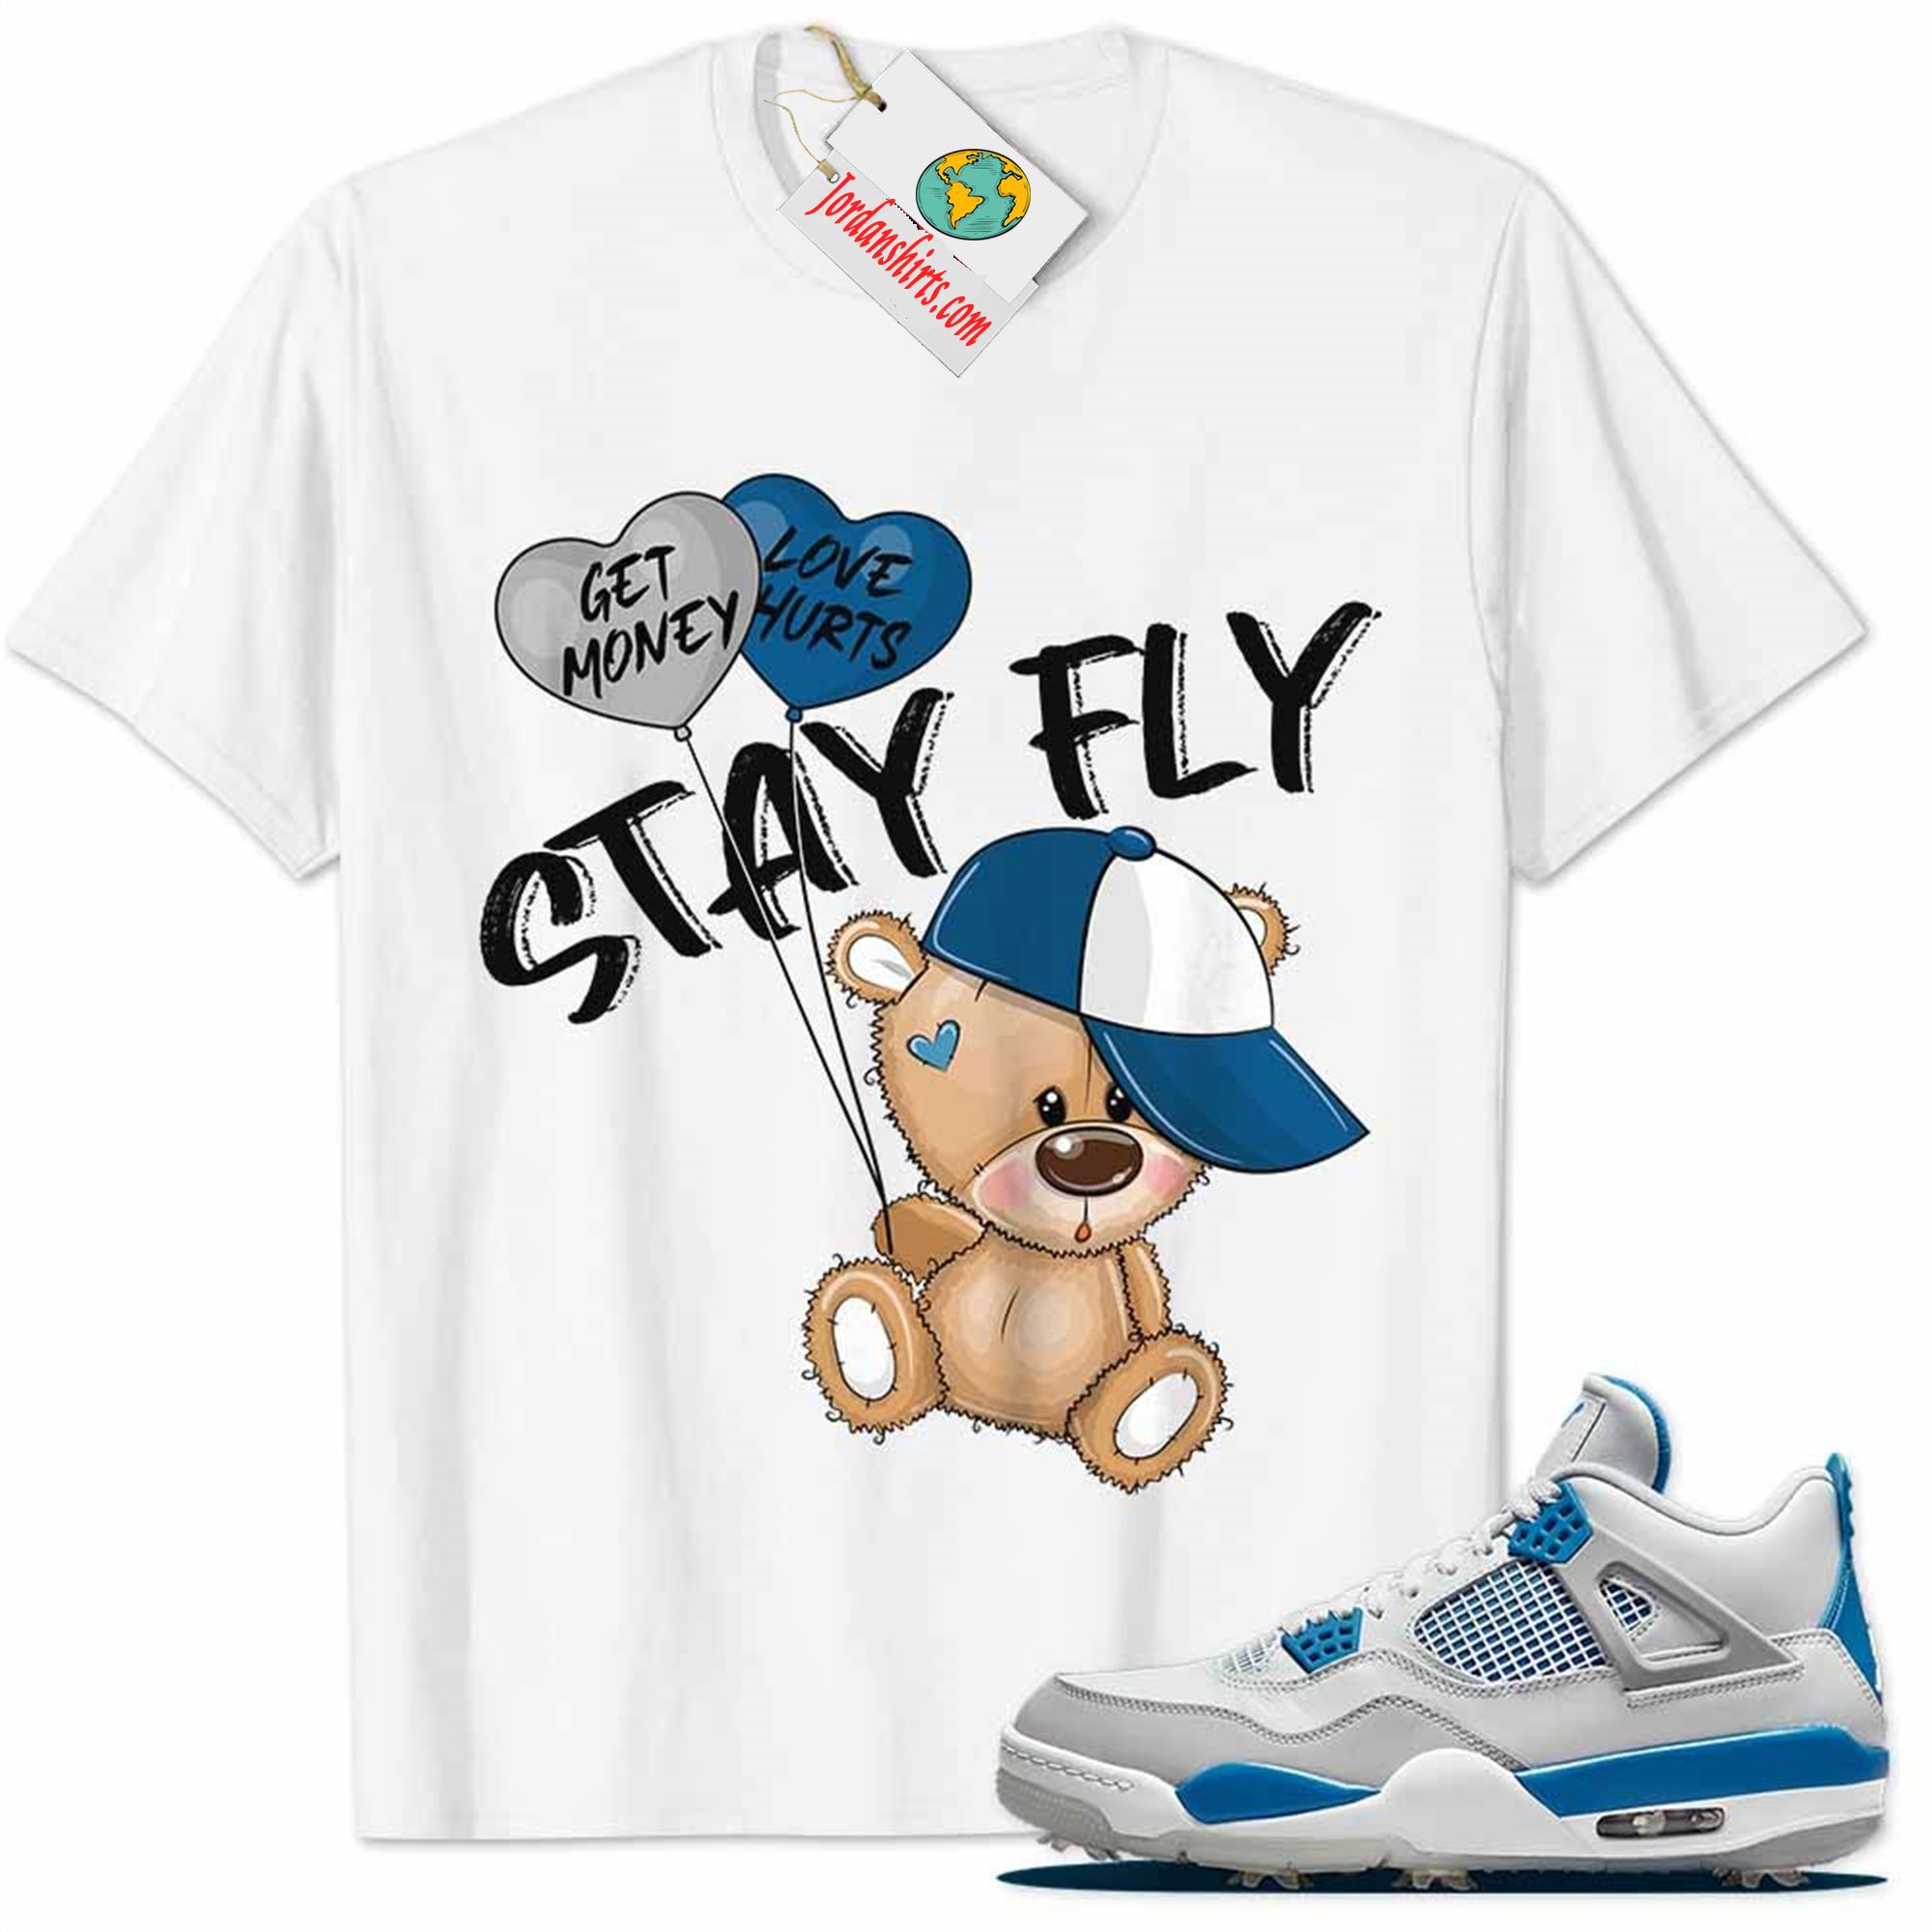 Jordan 4 Shirt, Golf Military Blue 4s Shirt Cute Teddy Bear Stay Fly Get Money White Full Size Up To 5xl